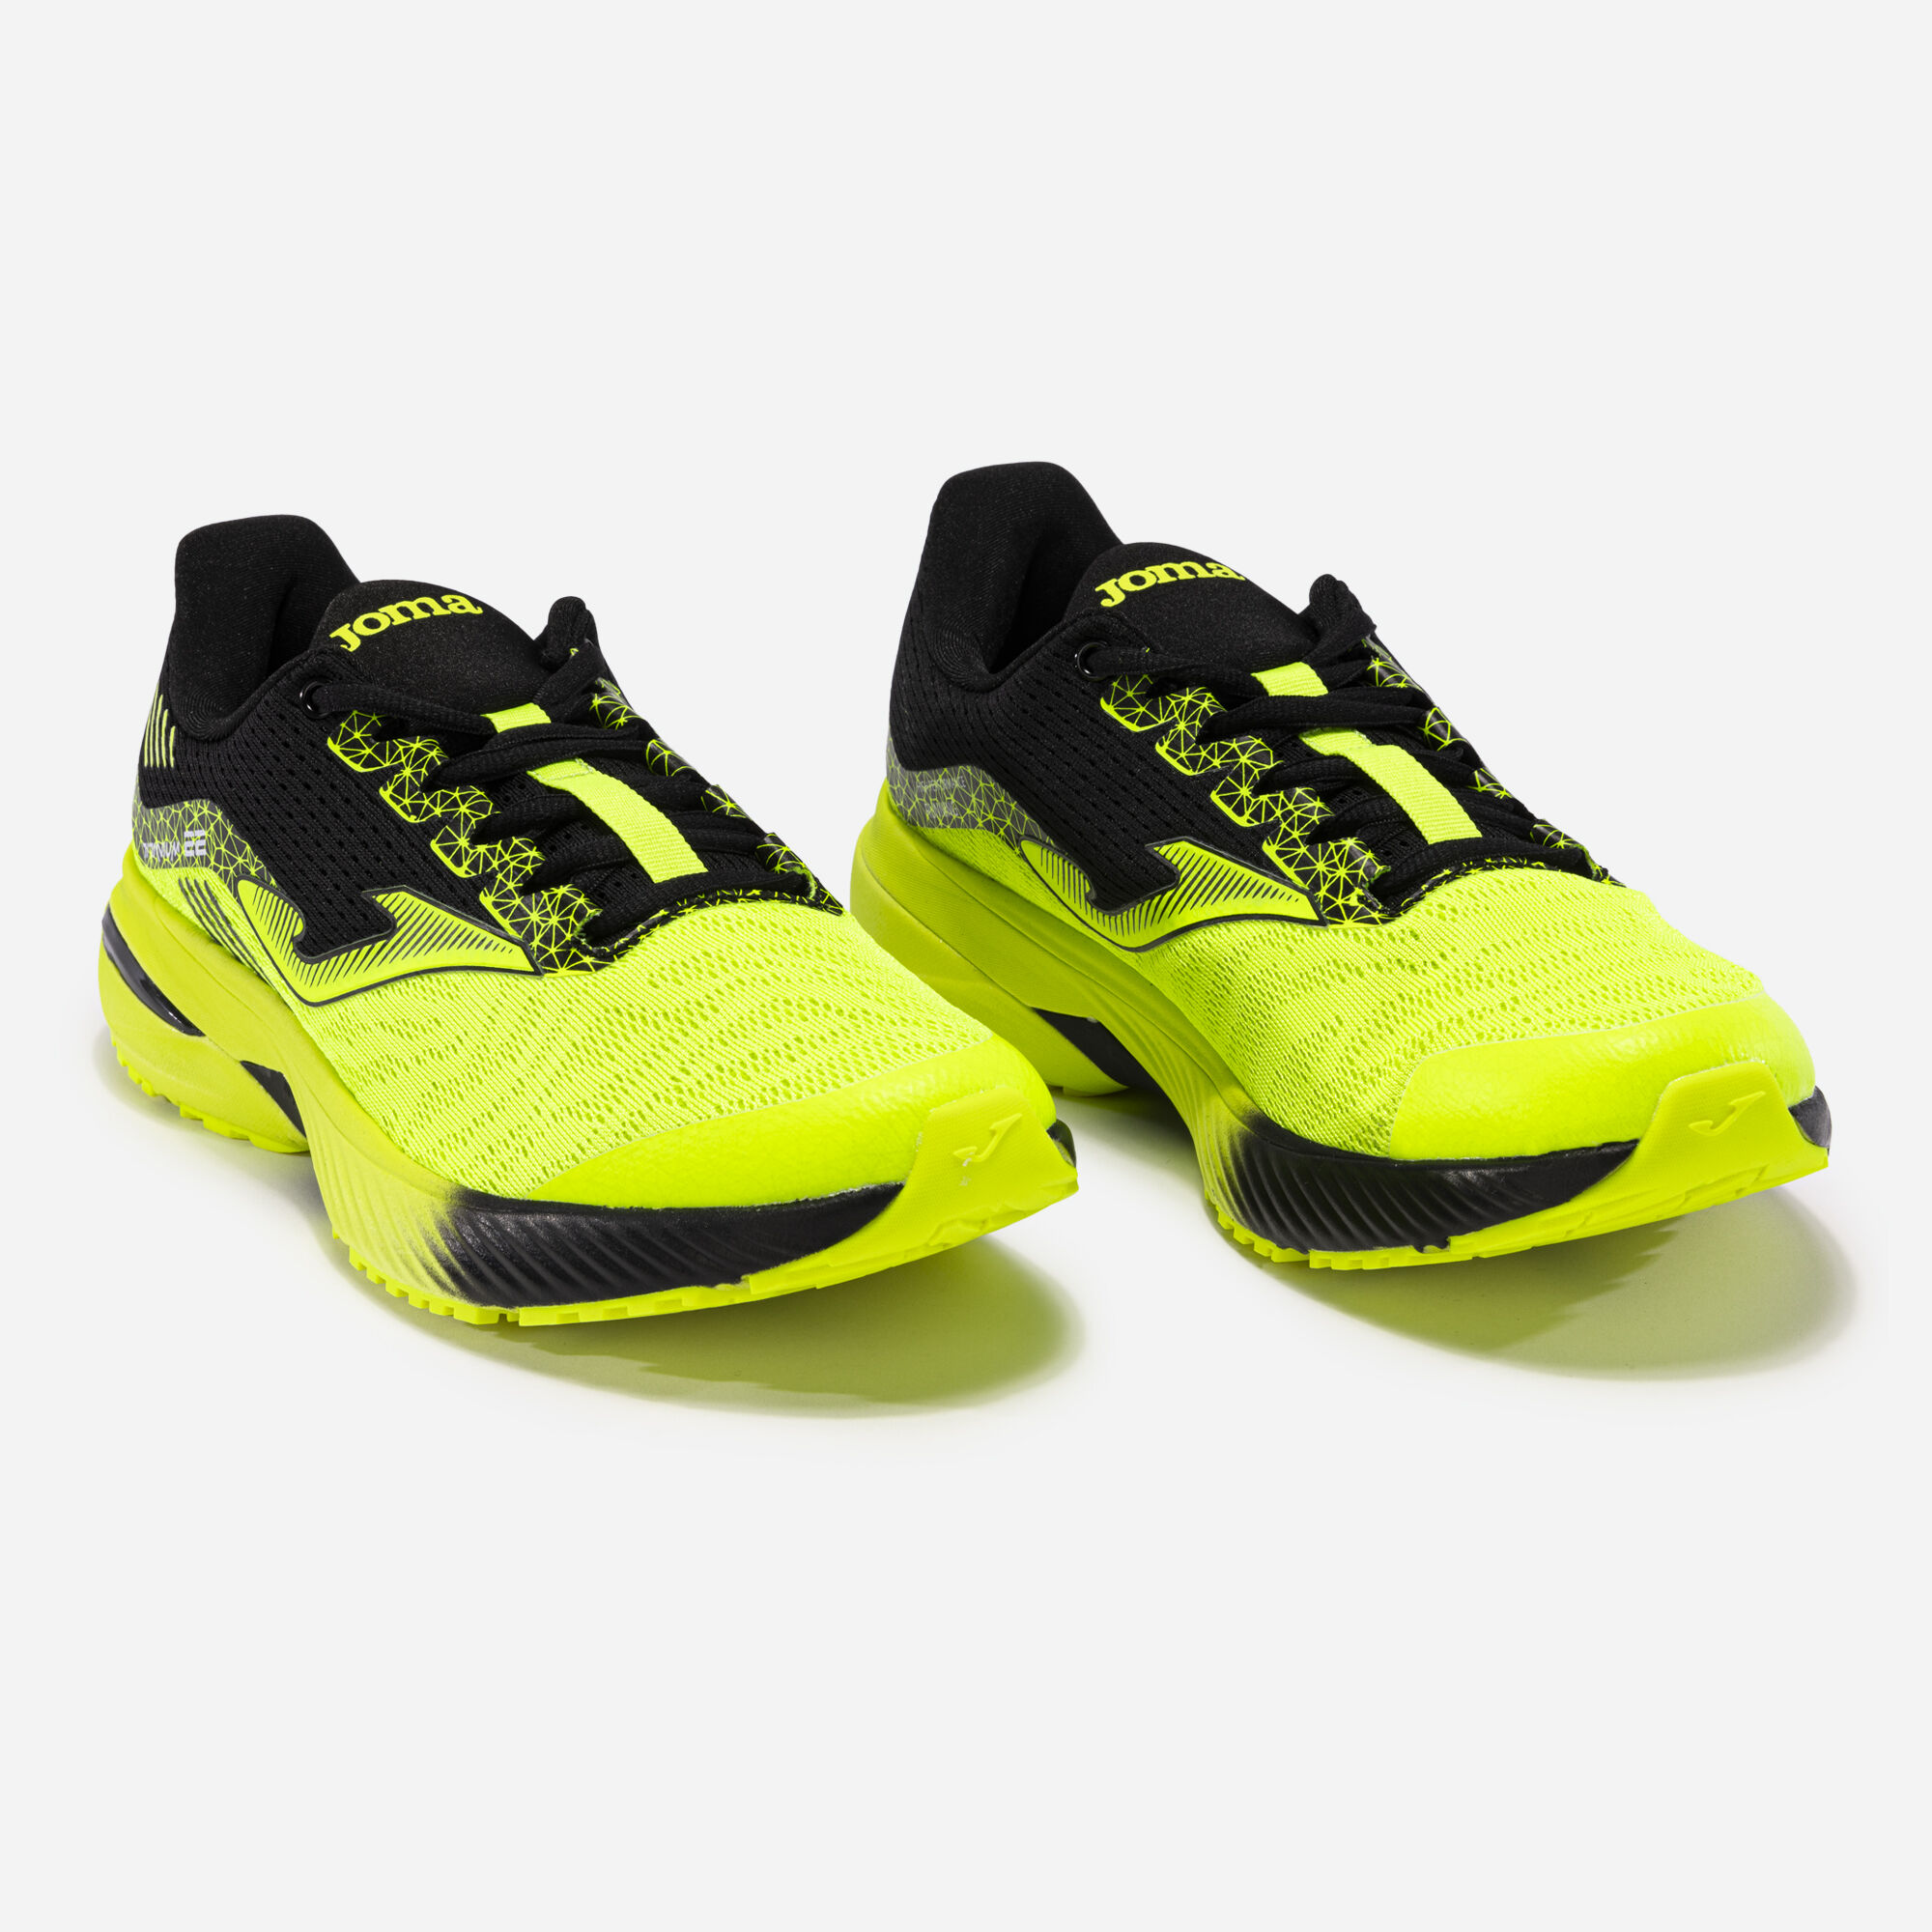 Running shoes Titanium 23 man fluorescent yellow black